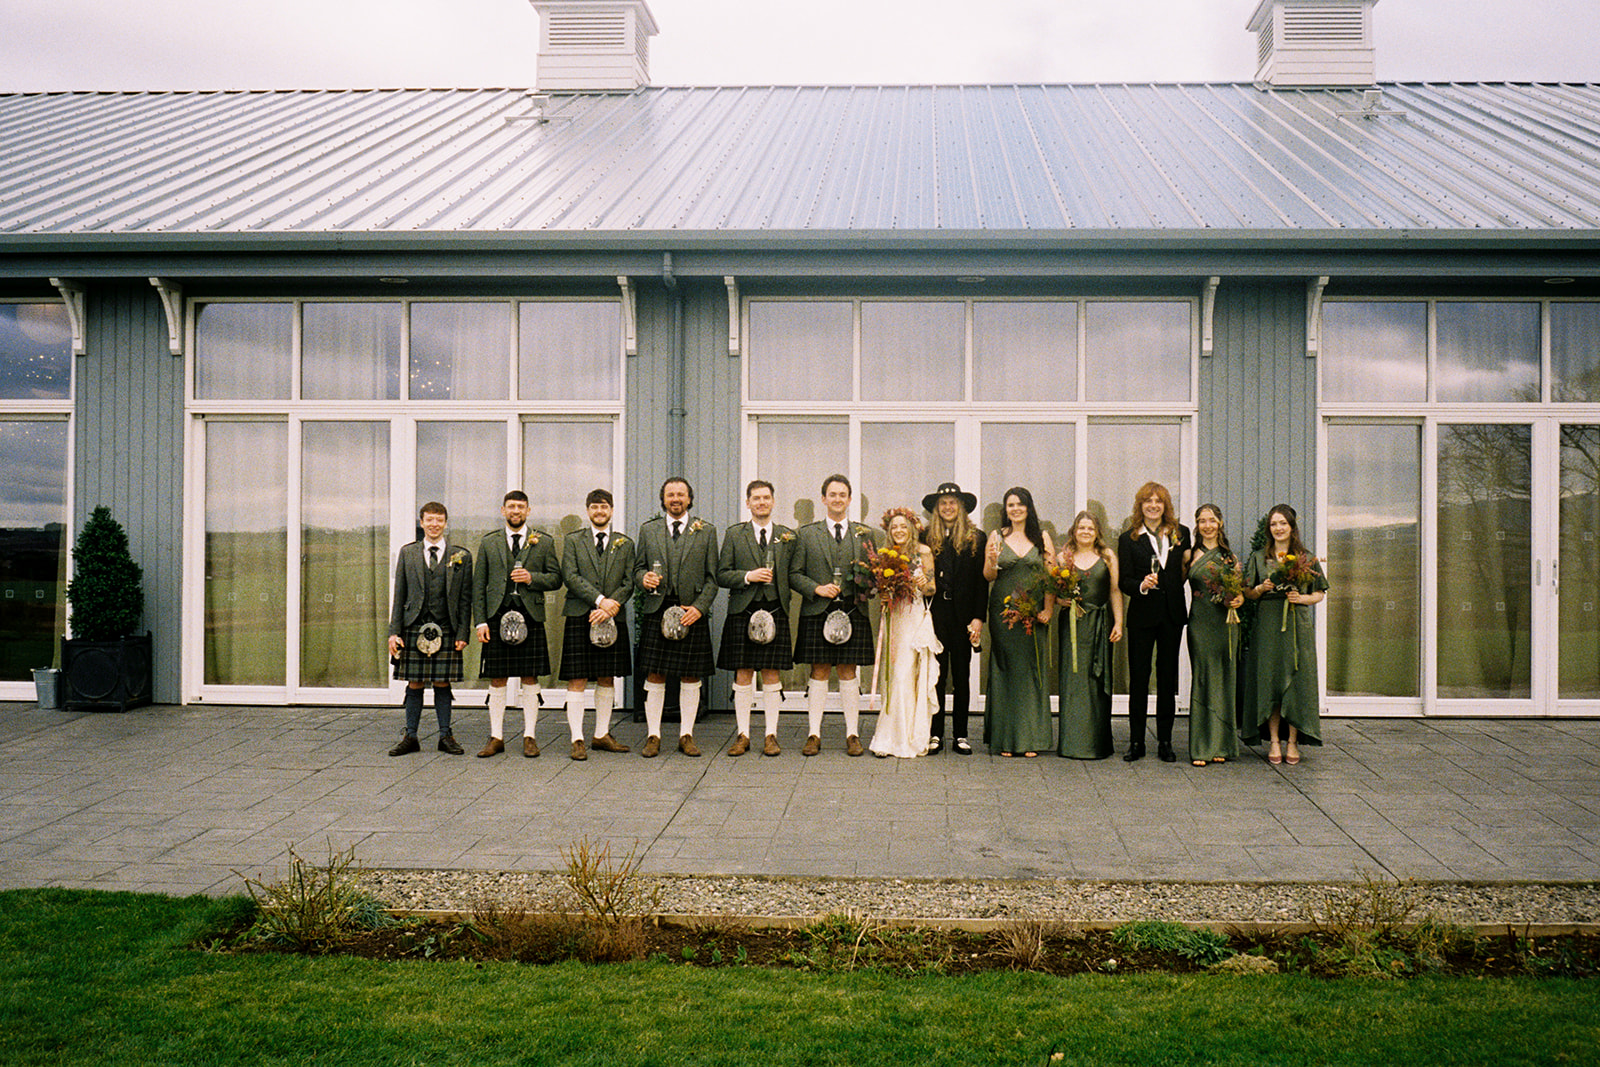 uk 35mm film wedding photographer scotland destination